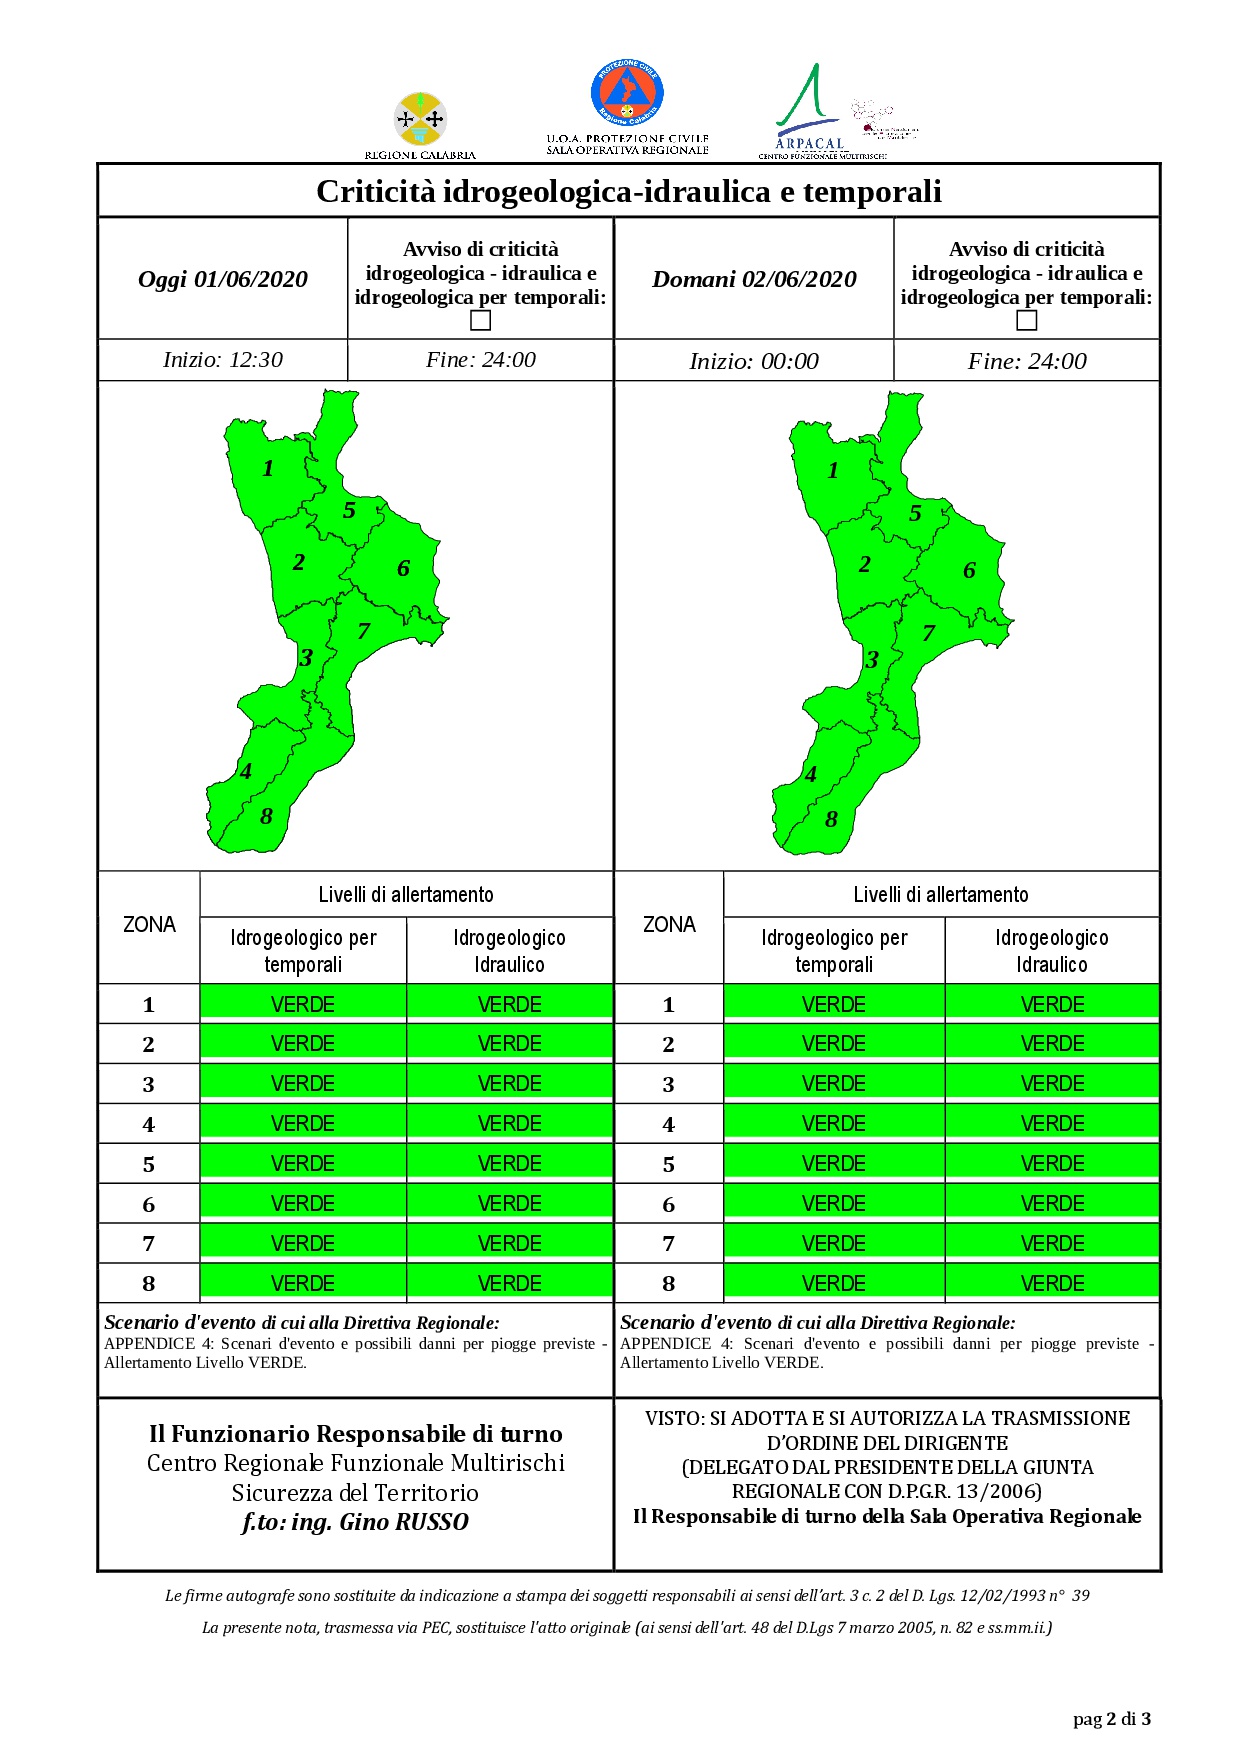 Criticità idrogeologica-idraulica e temporali in Calabria 01-06-2020